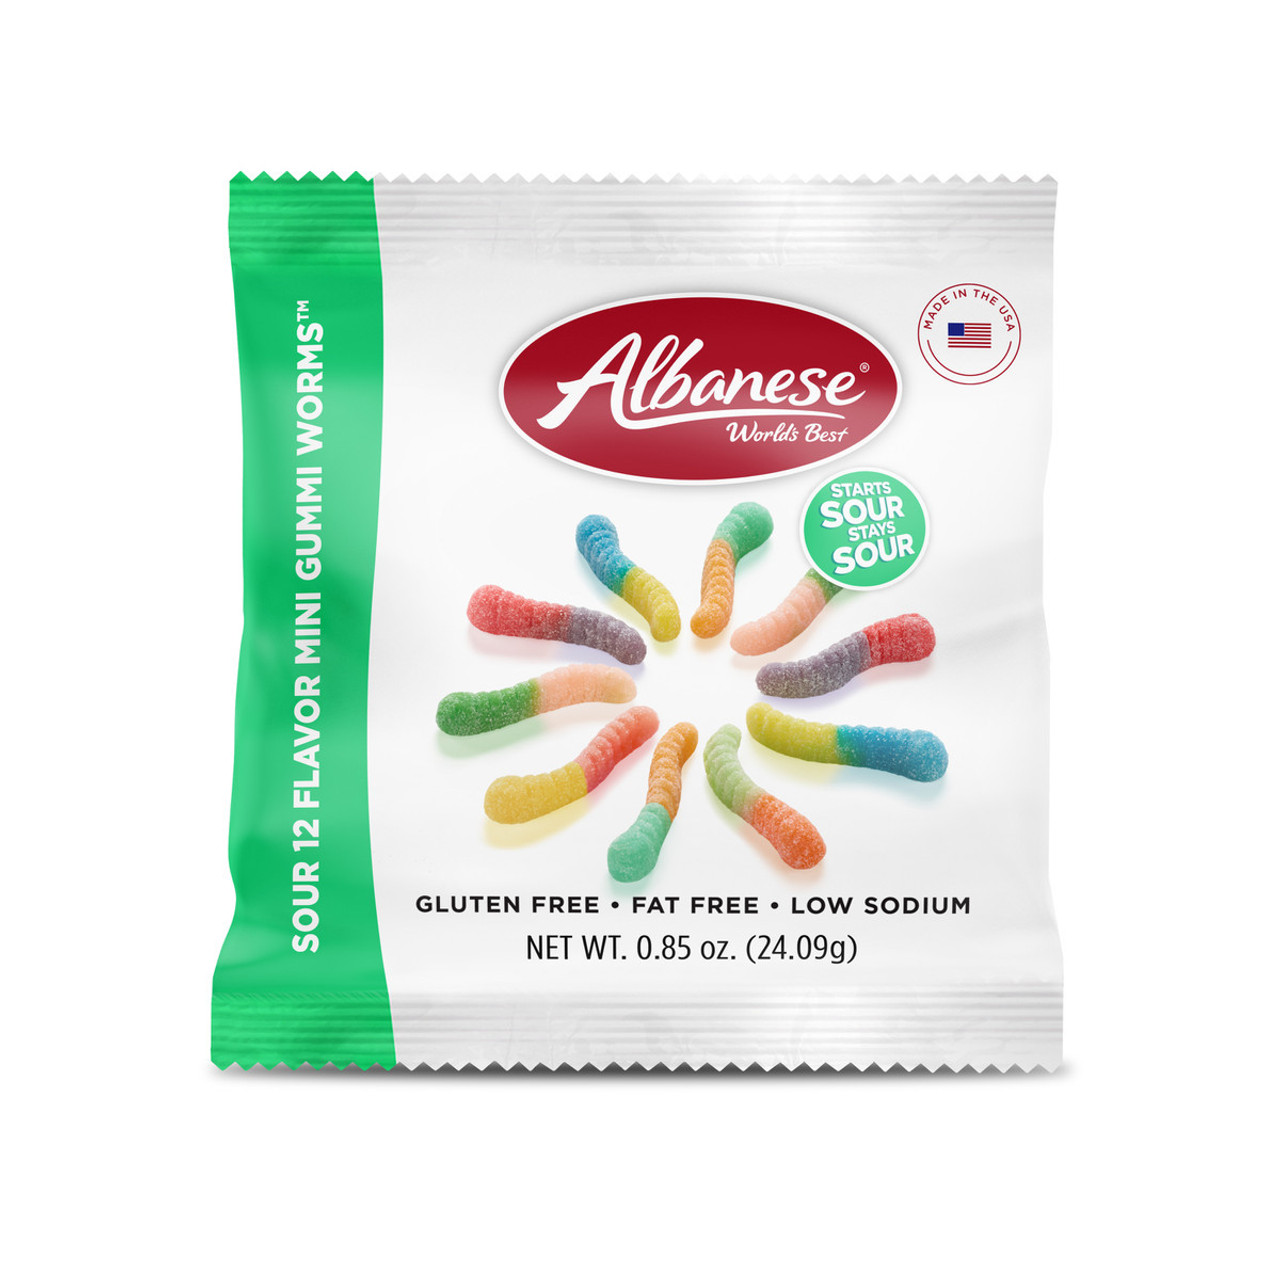 Albanese World's Best Sour 12 Flavor Gummi Bears - 8oz